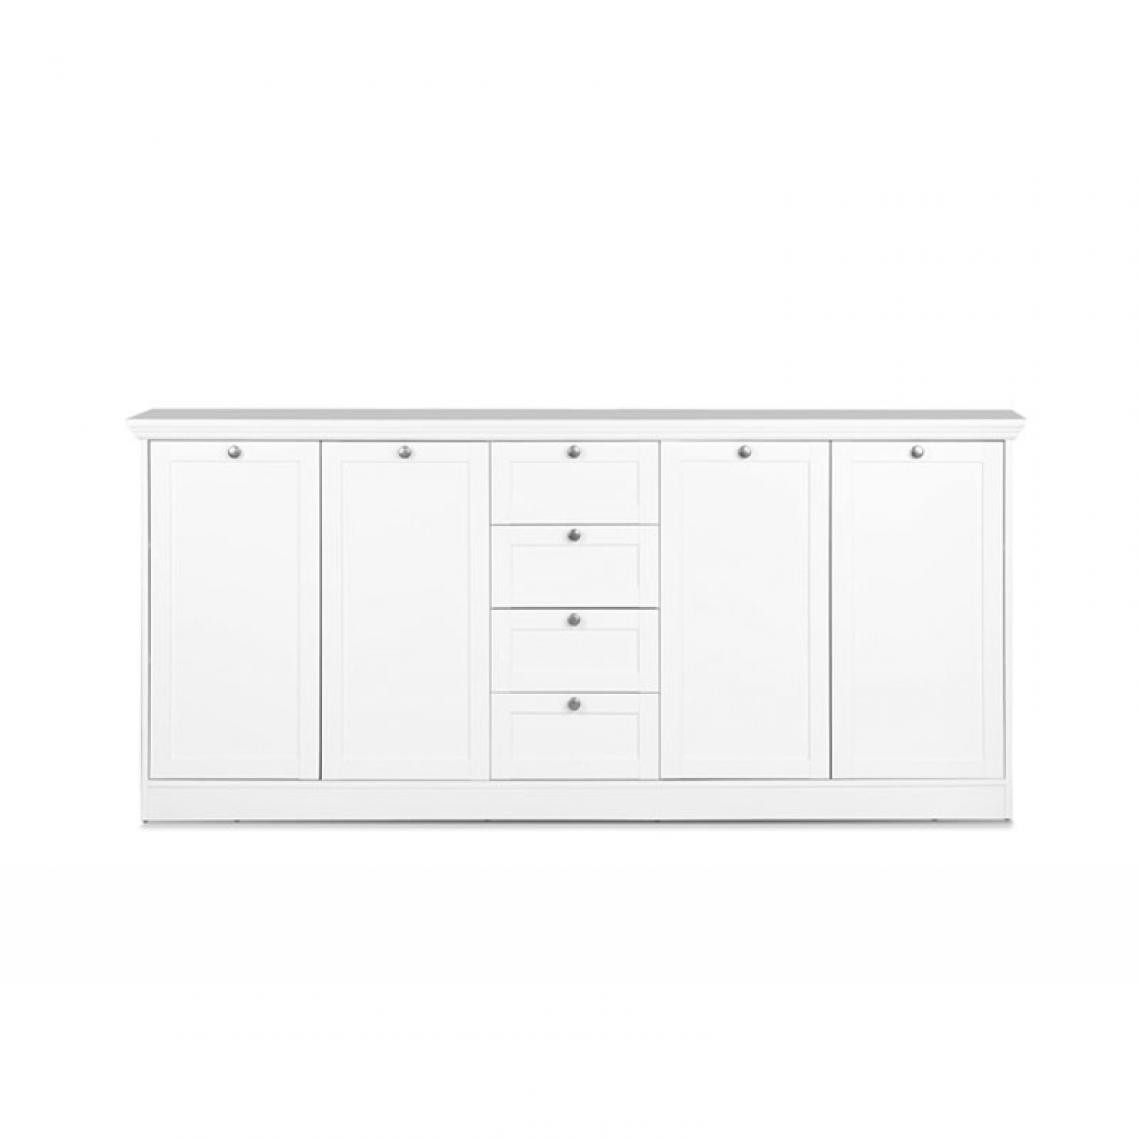 Webmarketpoint - Buffet mobile 4 portes 4 tiroirs coloris blanc 200x40xh.90 cm - Buffets, chiffonniers